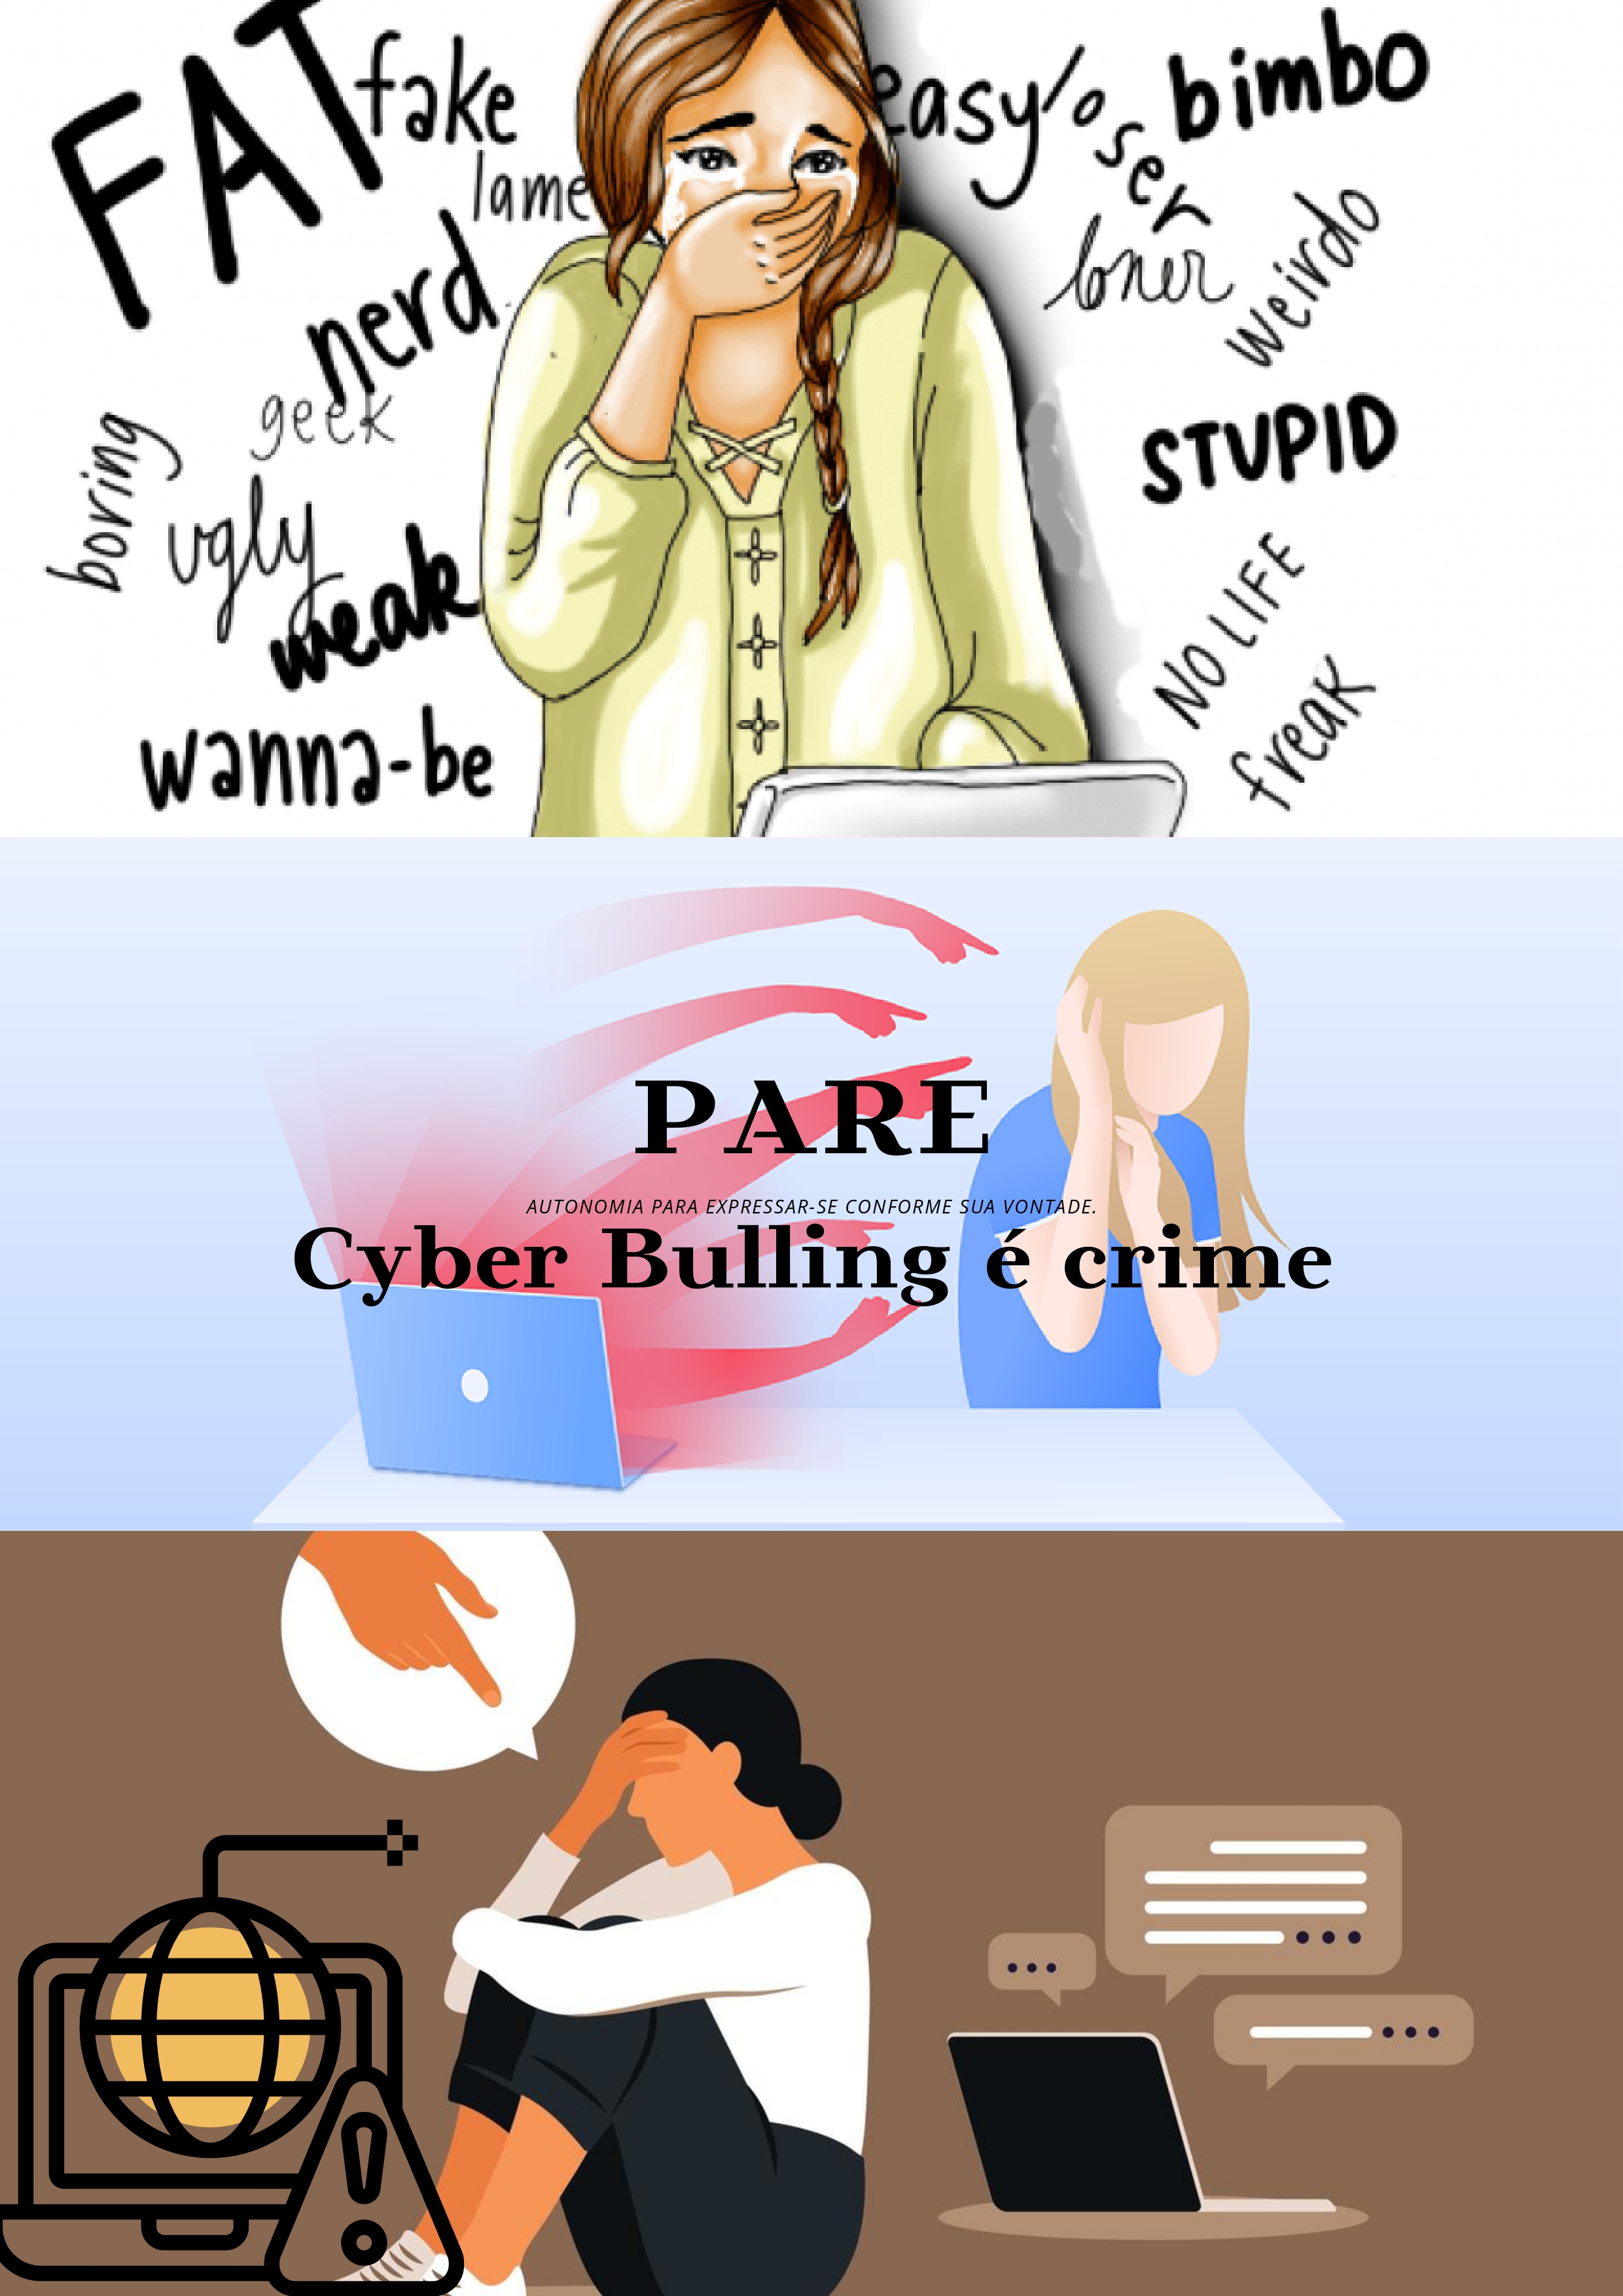 Cyber bullying
